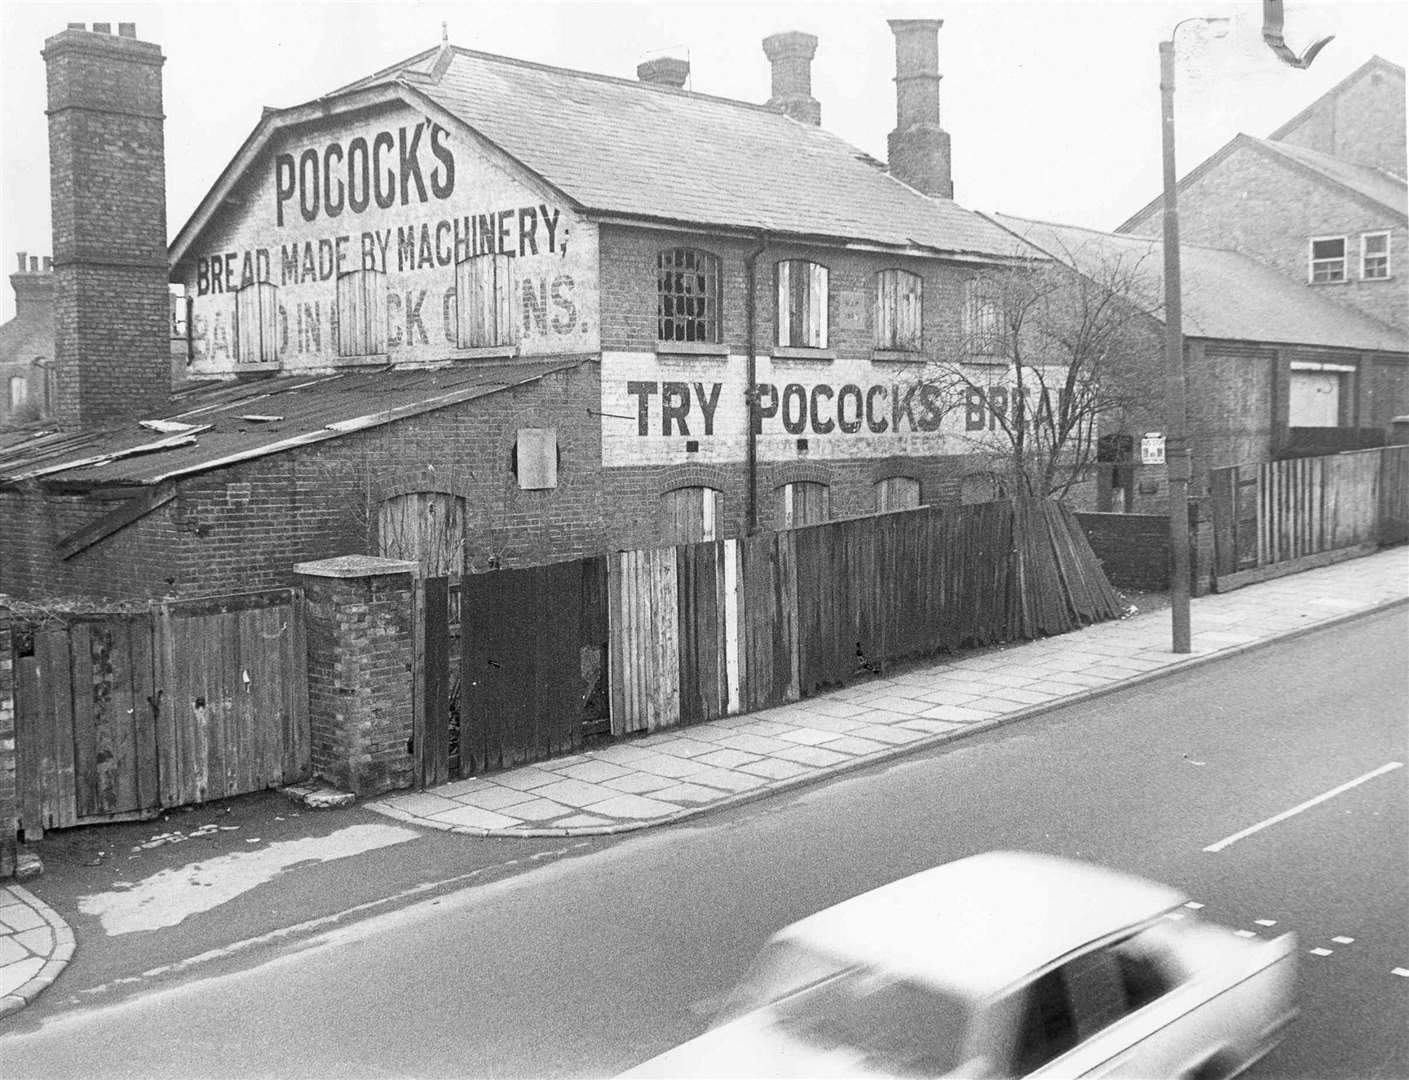 Pococks Bread Factory in Tonbridge Road, Maidstone, in 1970